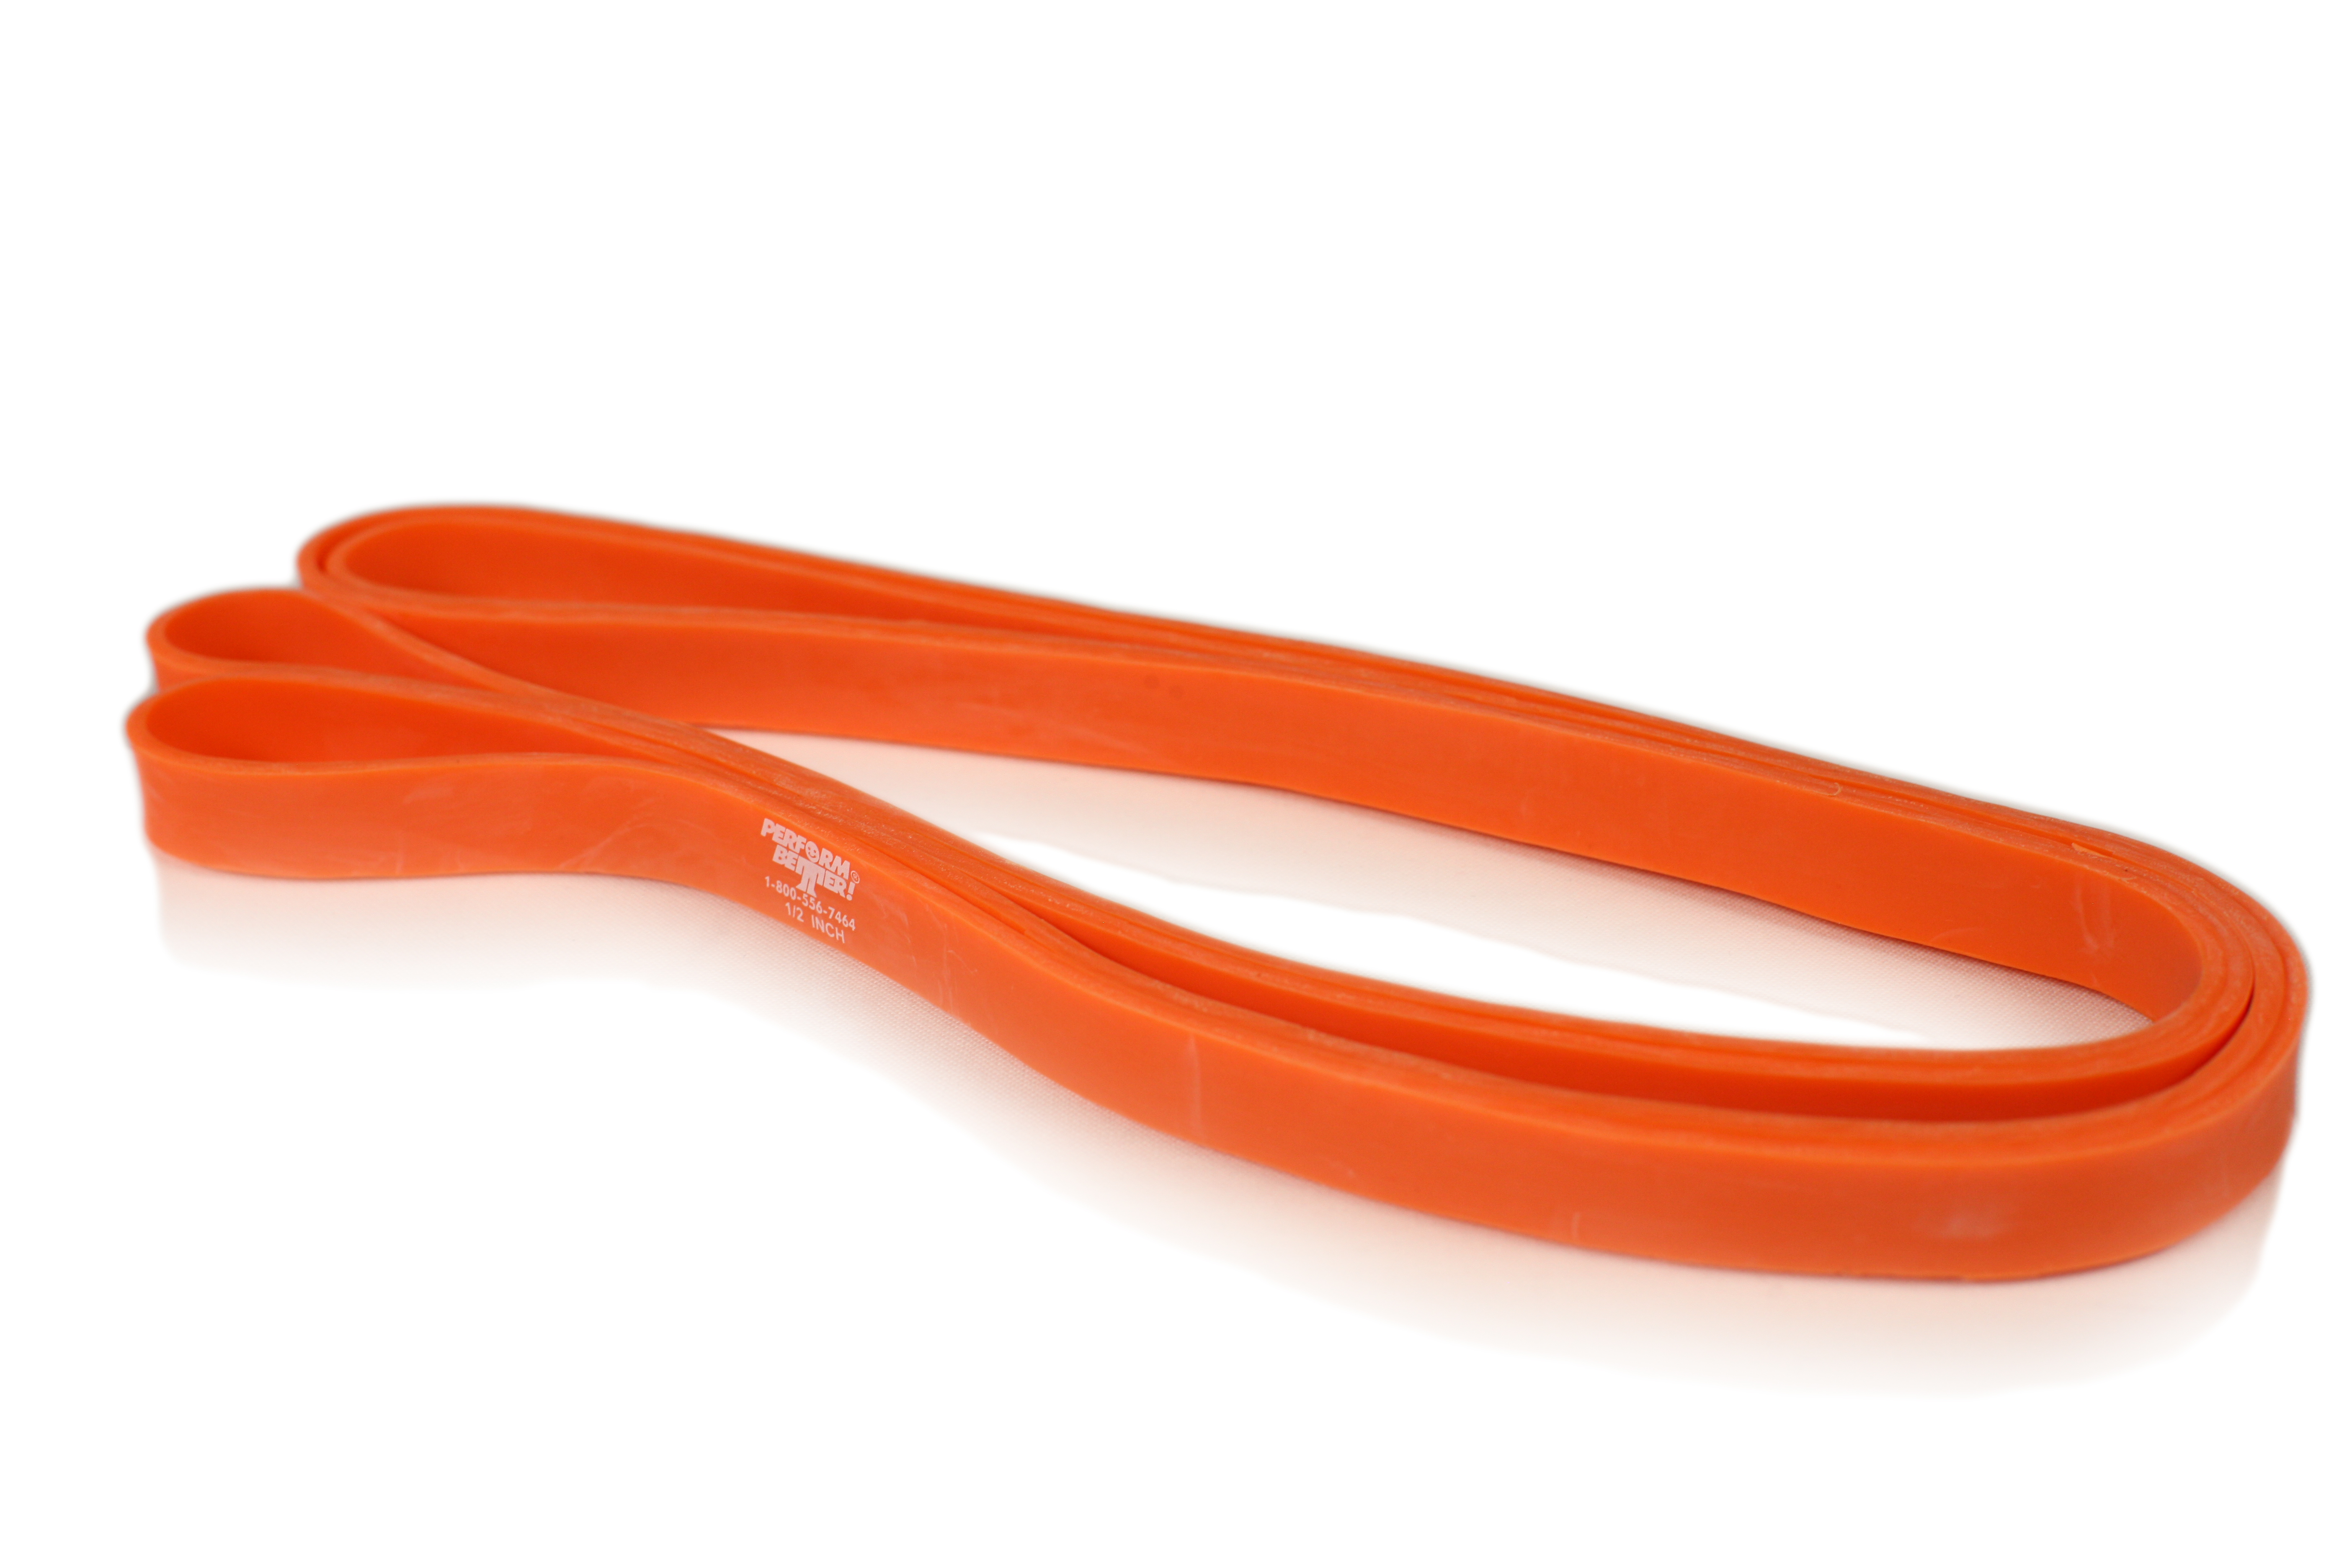 Superbands - 0,6 cm breit, 6 kg, orange 5mm dick